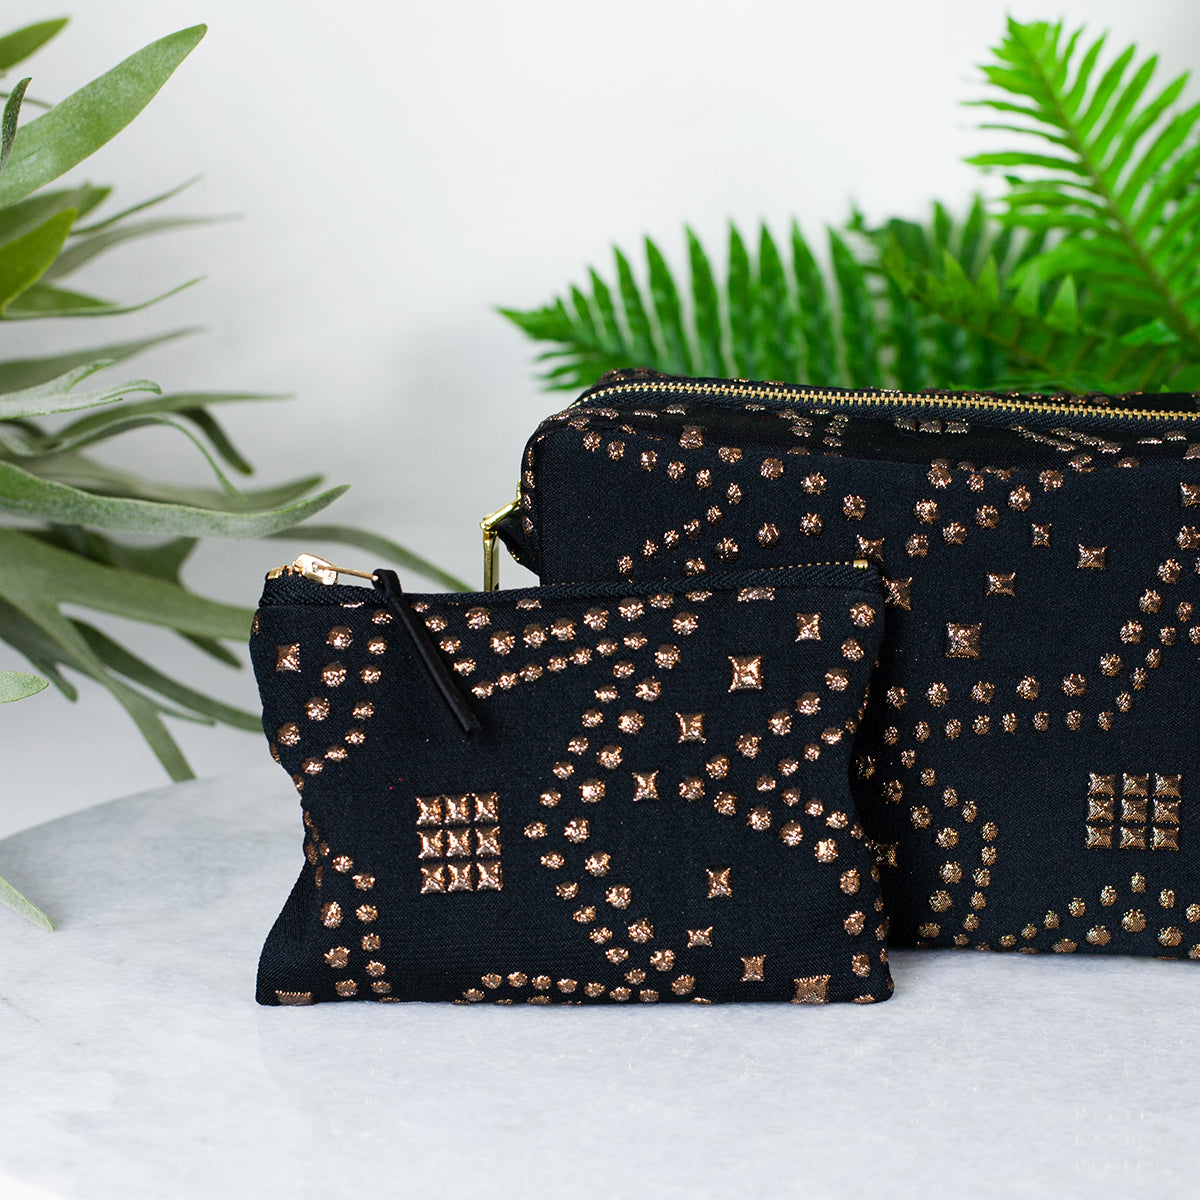 black star studded purse close up